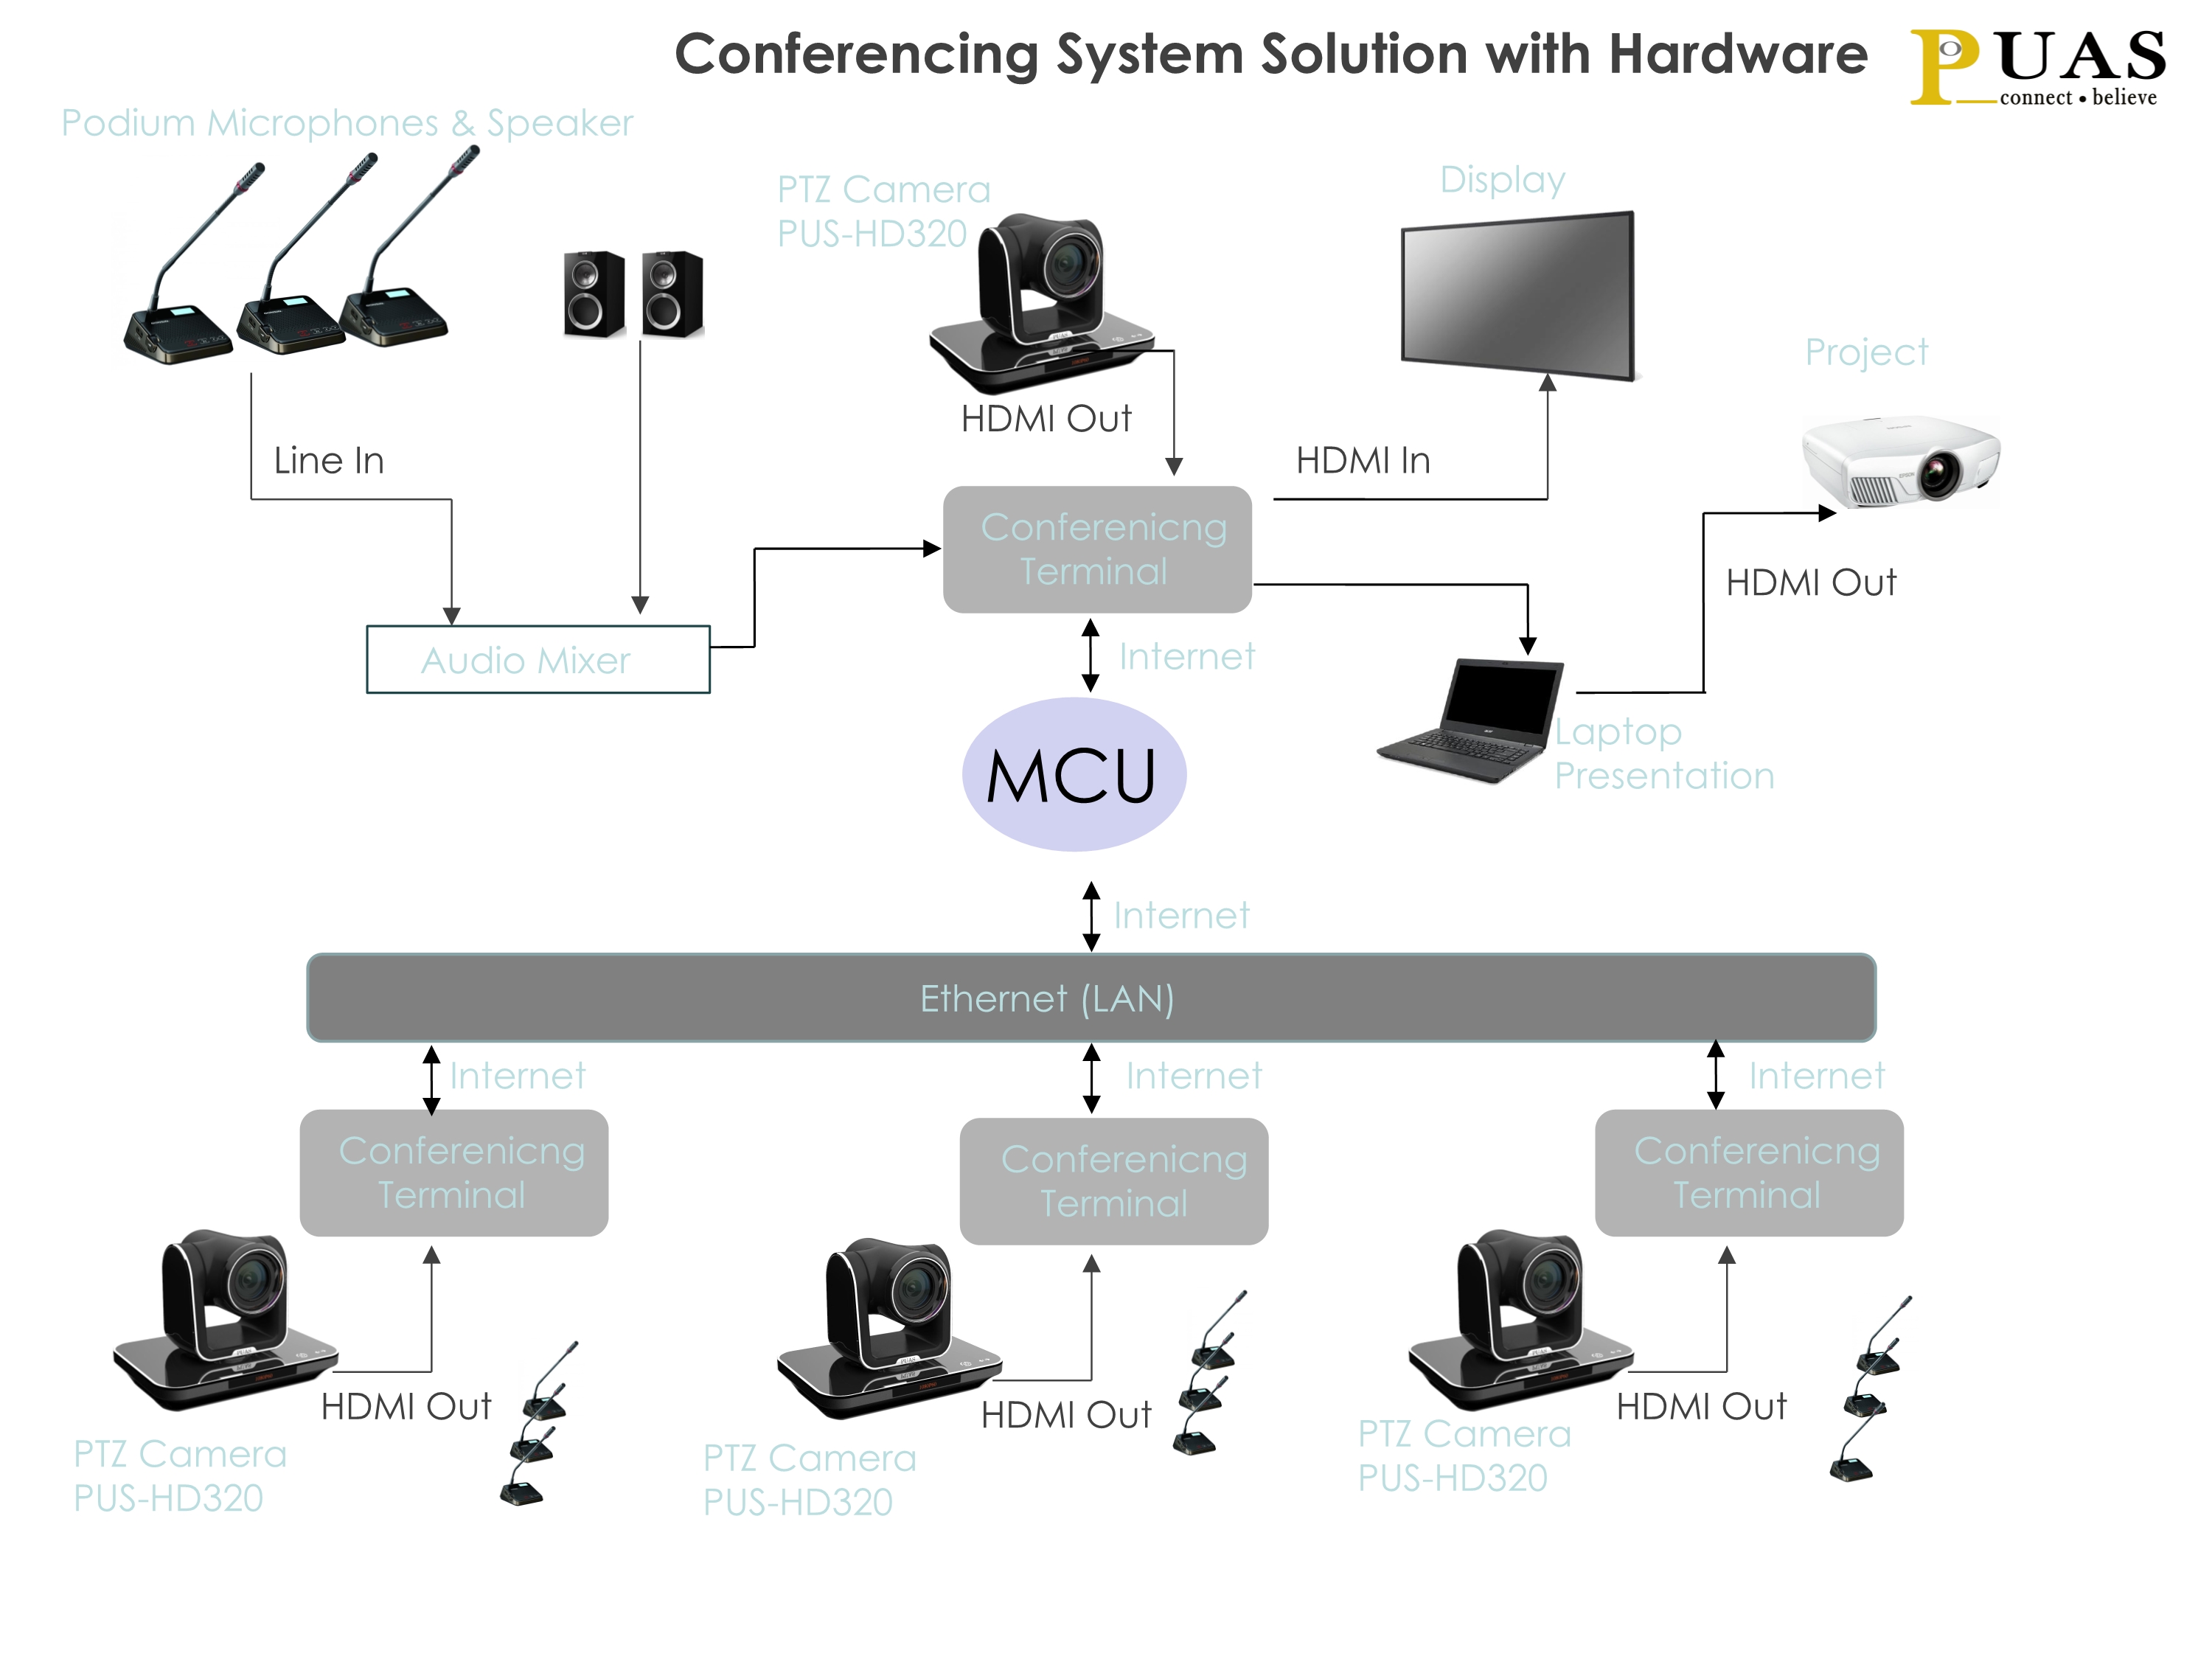 Hardware Conferencing